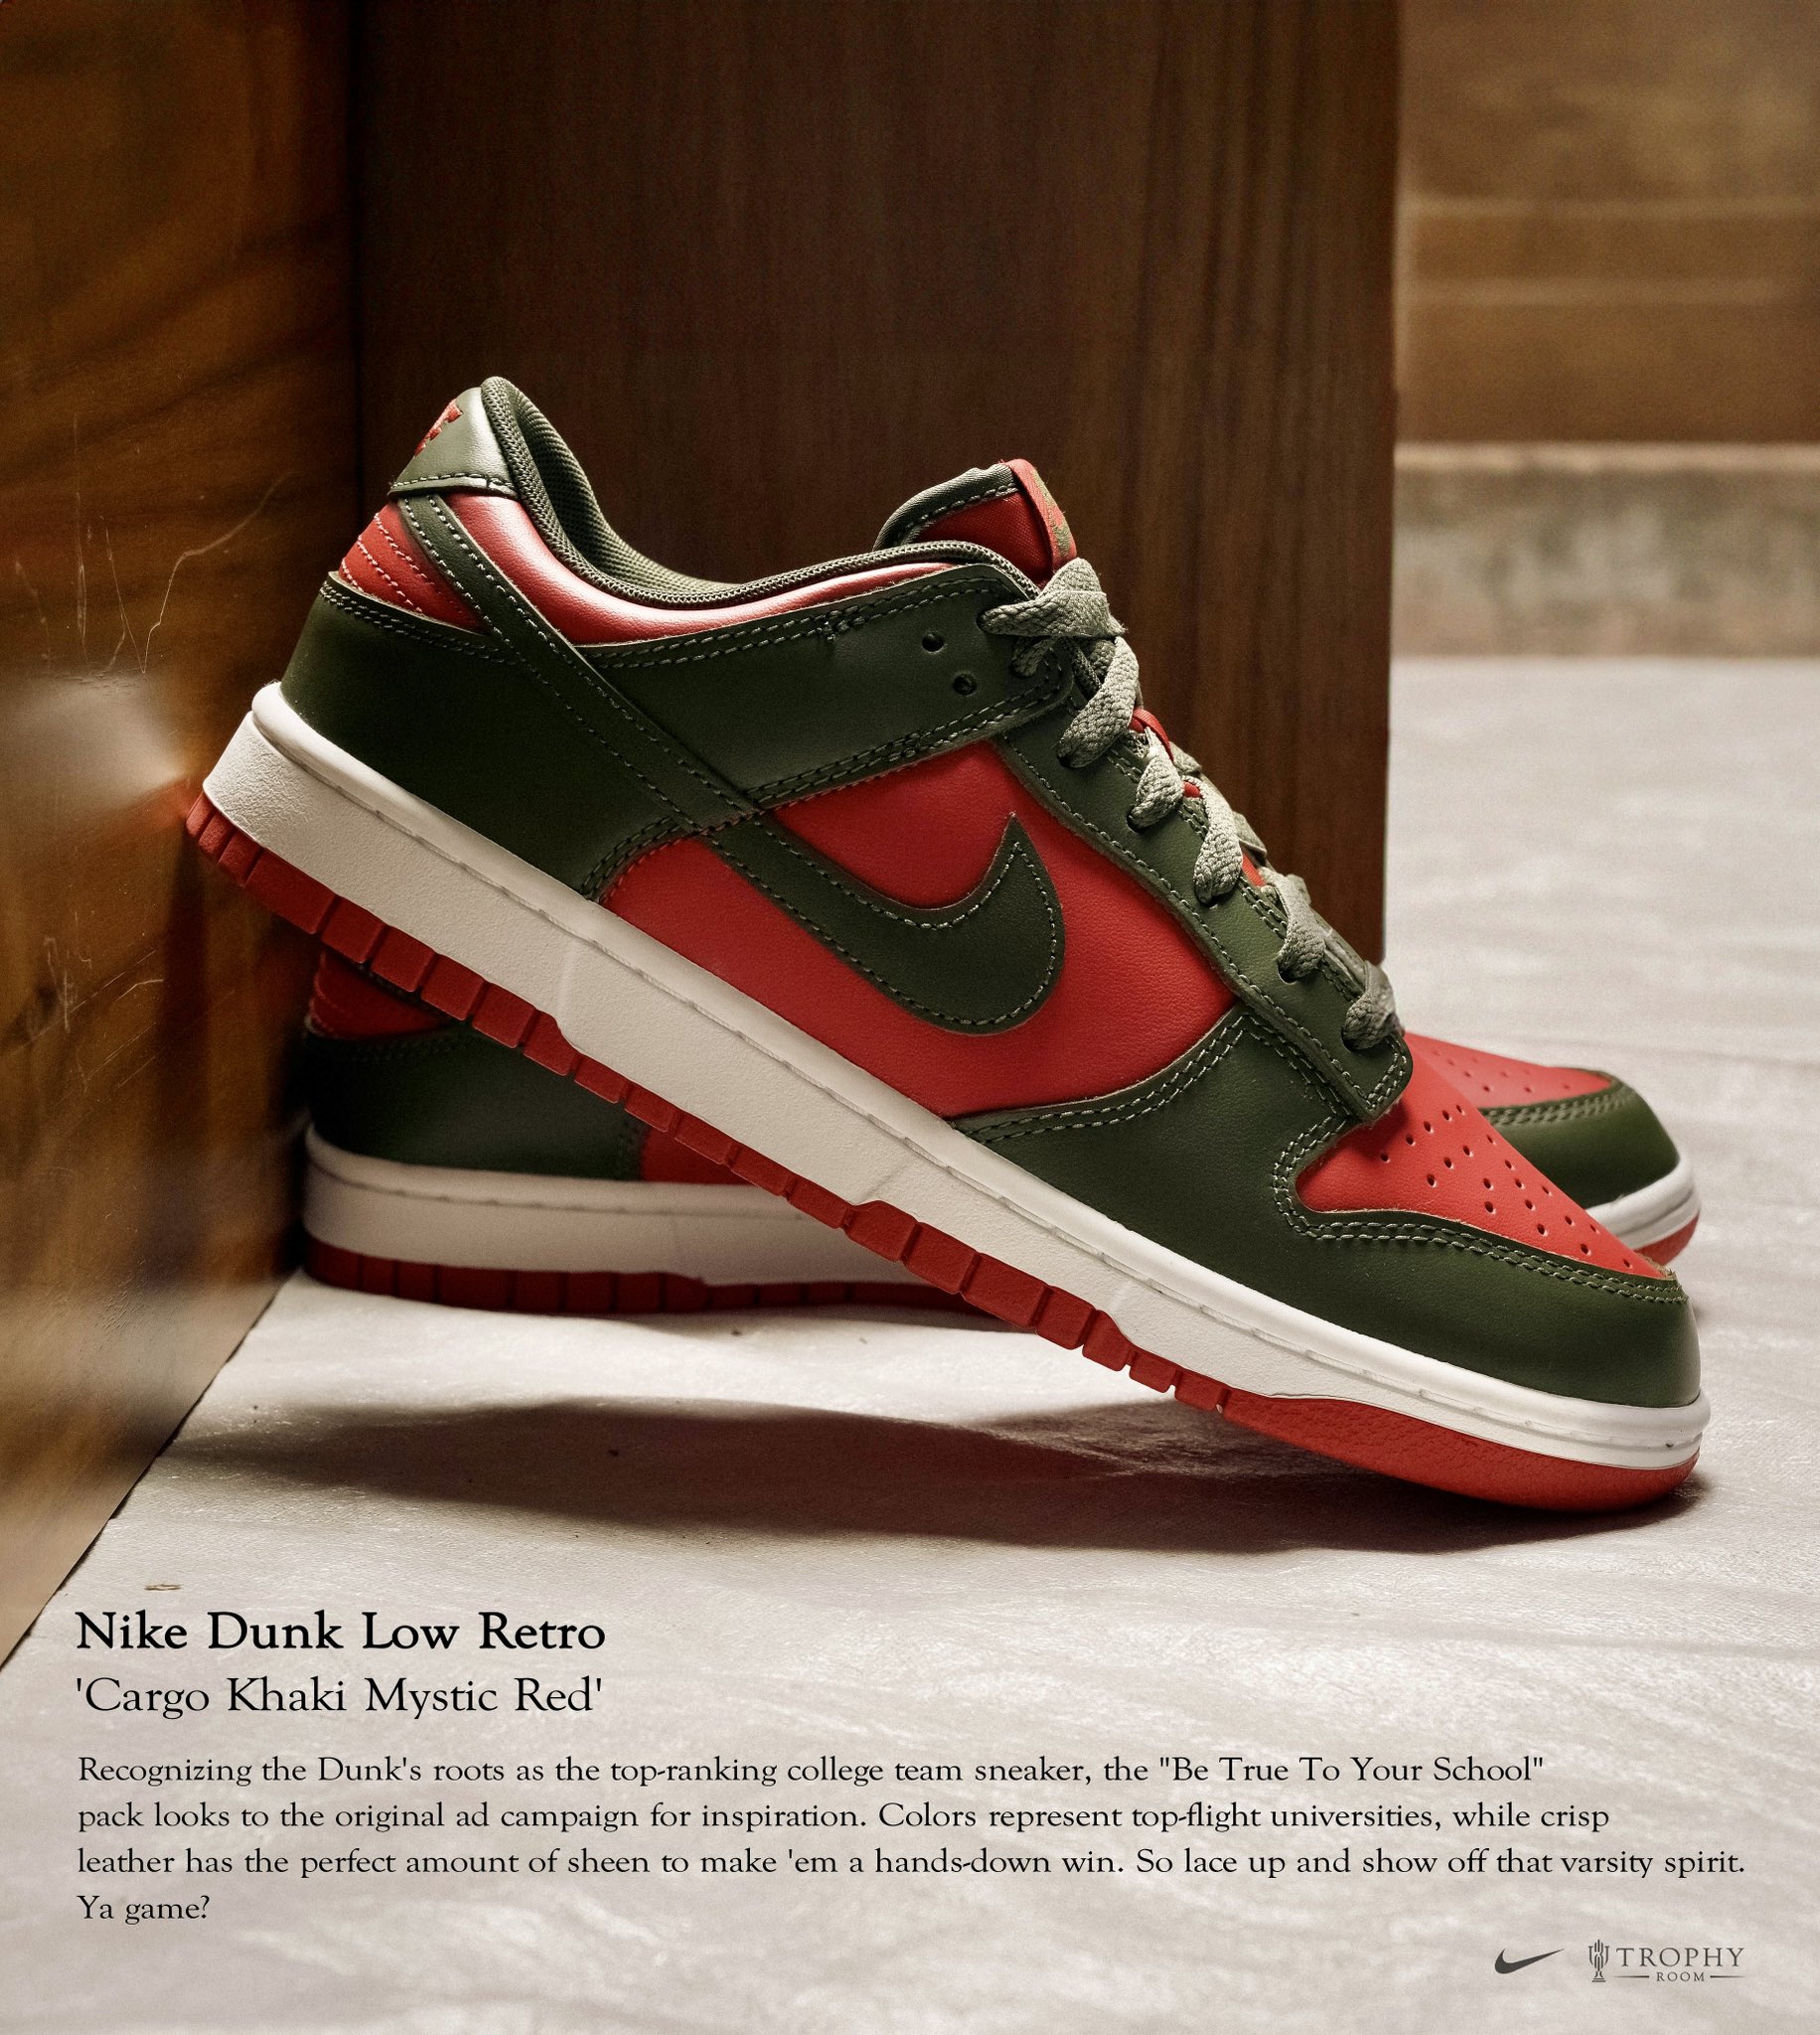 TROPHY ROOM on X: The @Nike Dunk Low Retro 'Cargo Khaki Mystic